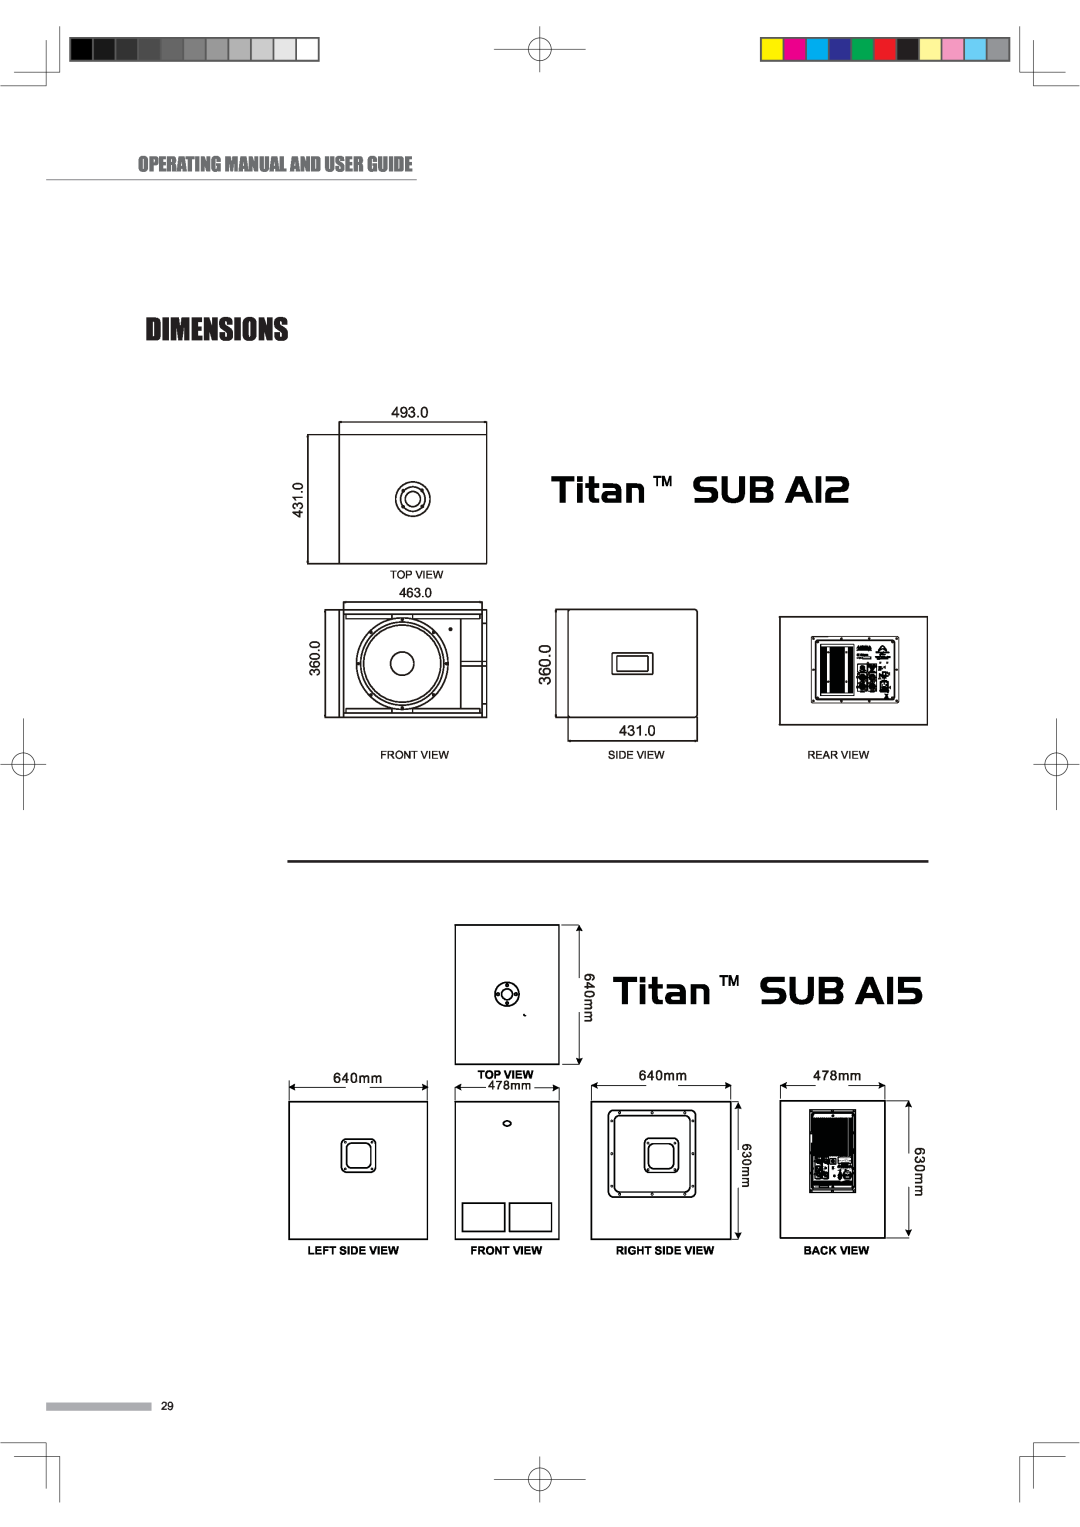 Wharfedale manual Titan SUB A15, Titan SUB A12, Dimensions, Operating Manual And User Guide, 360.0, 493.0, 431.0, 463.0 